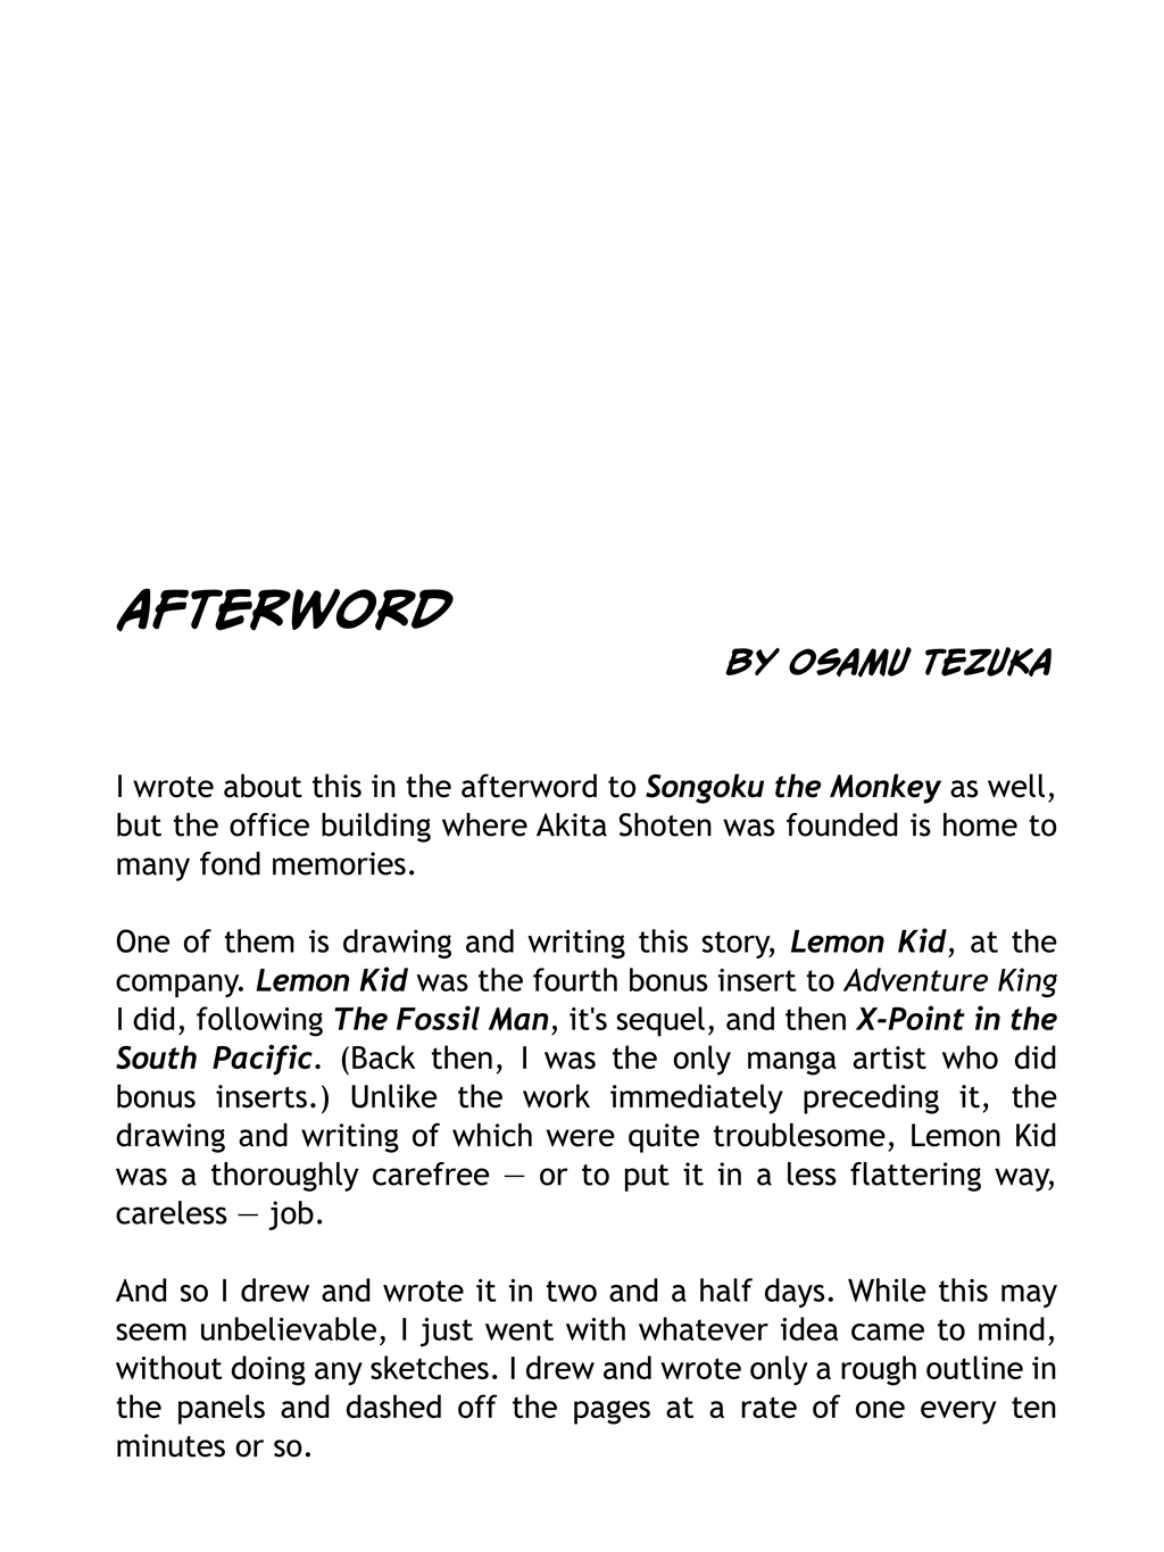 Lemon Kid Vol.1 Chapter 12.1: Afterword - Picture 1